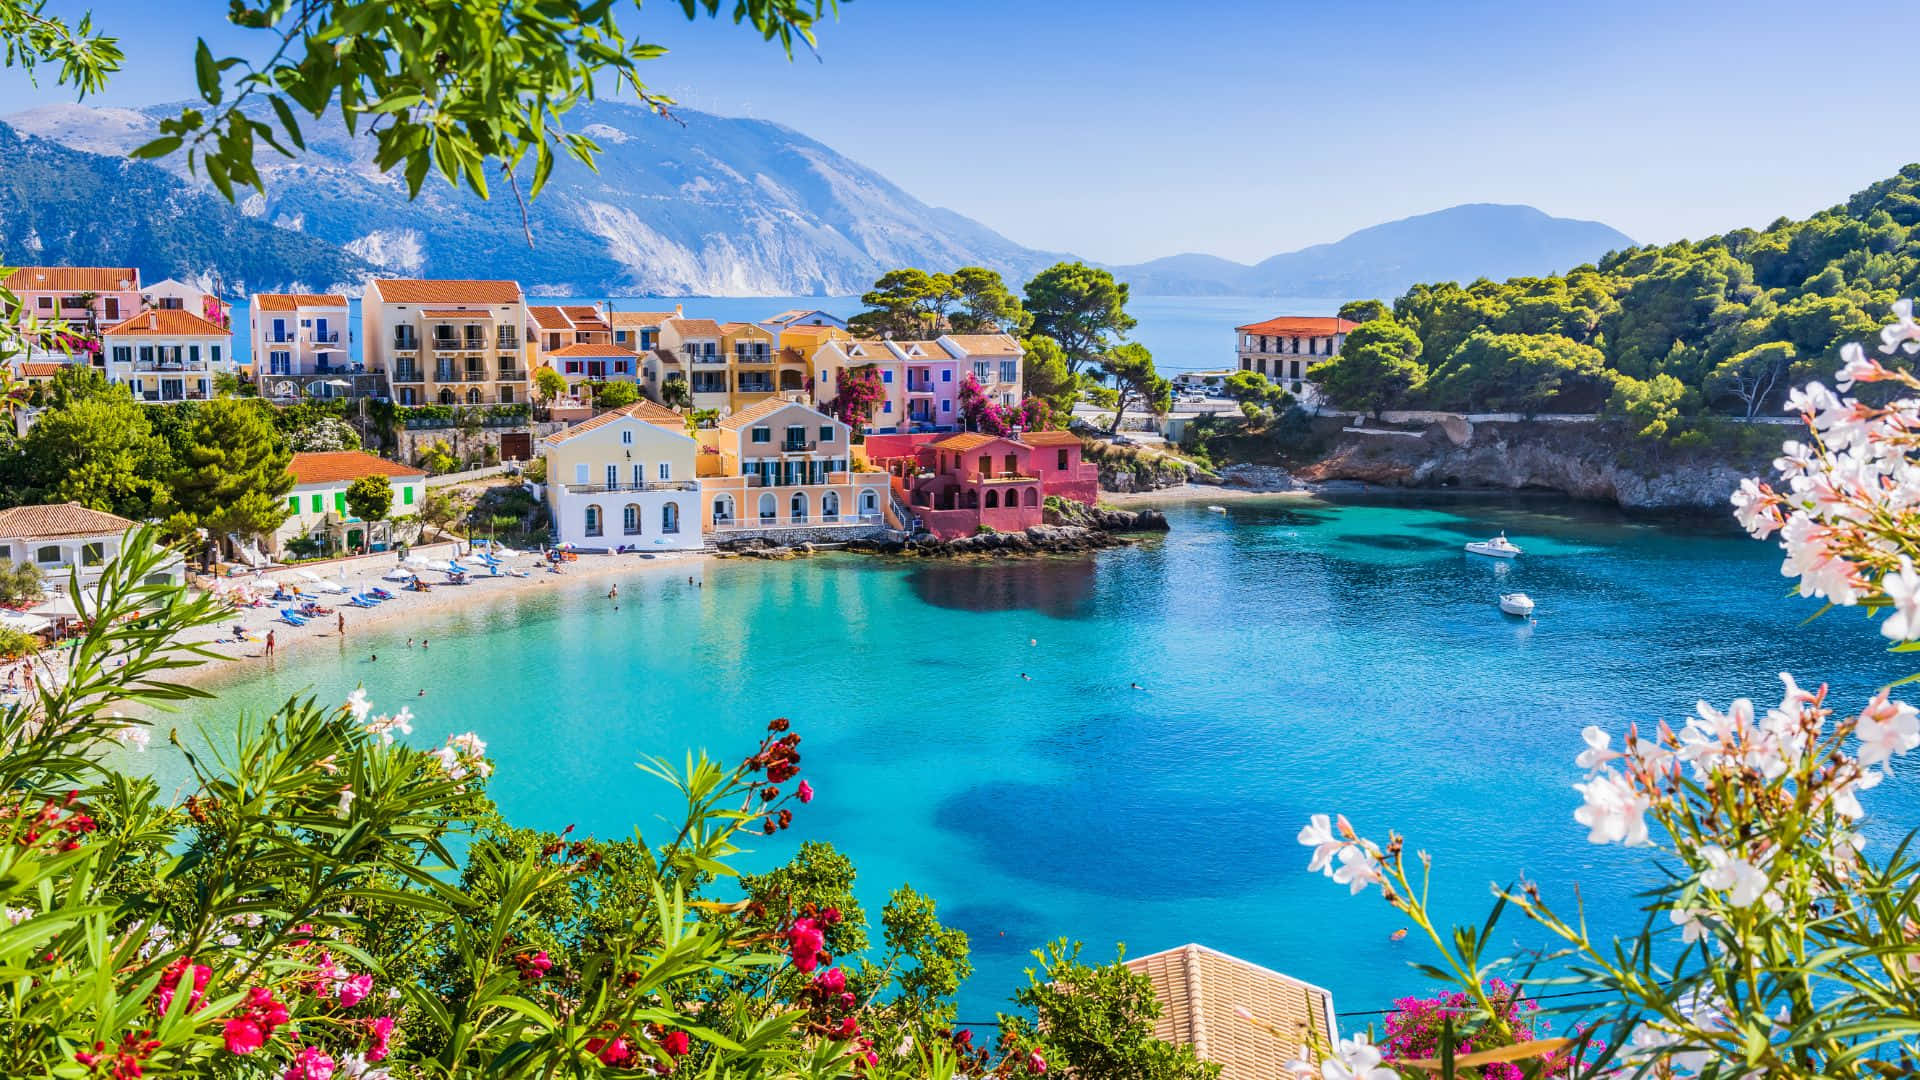 The stunning beauty of Greece!